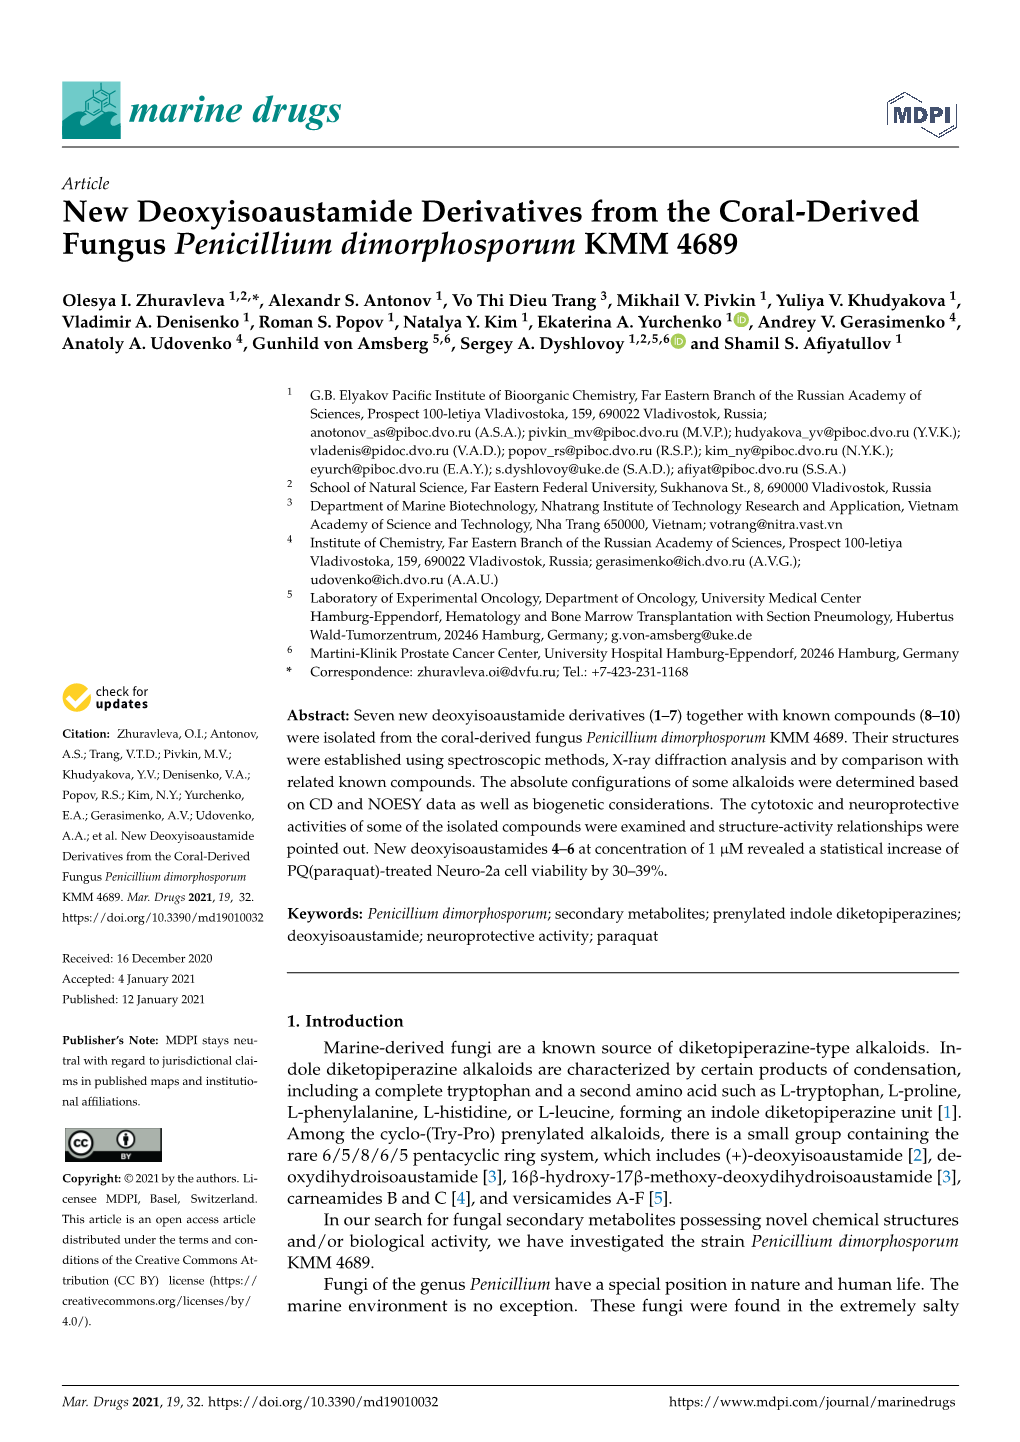 New Deoxyisoaustamide Derivatives from the Coral-Derived Fungus Penicillium Dimorphosporum KMM 4689